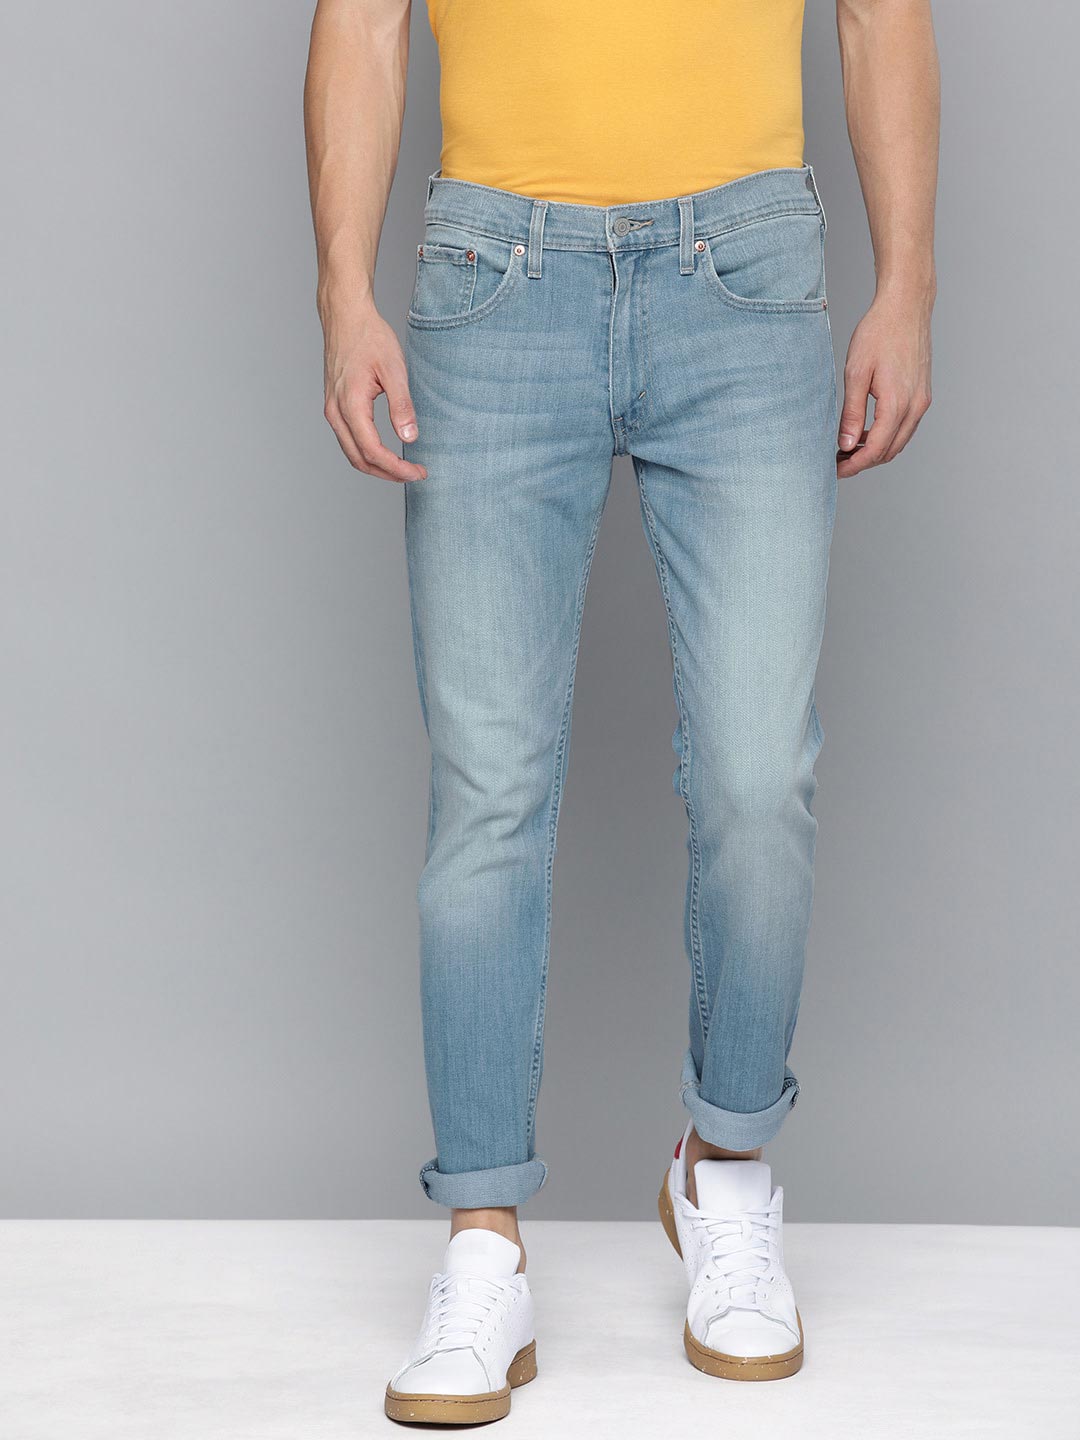 levis 65504 skinny straight jeans